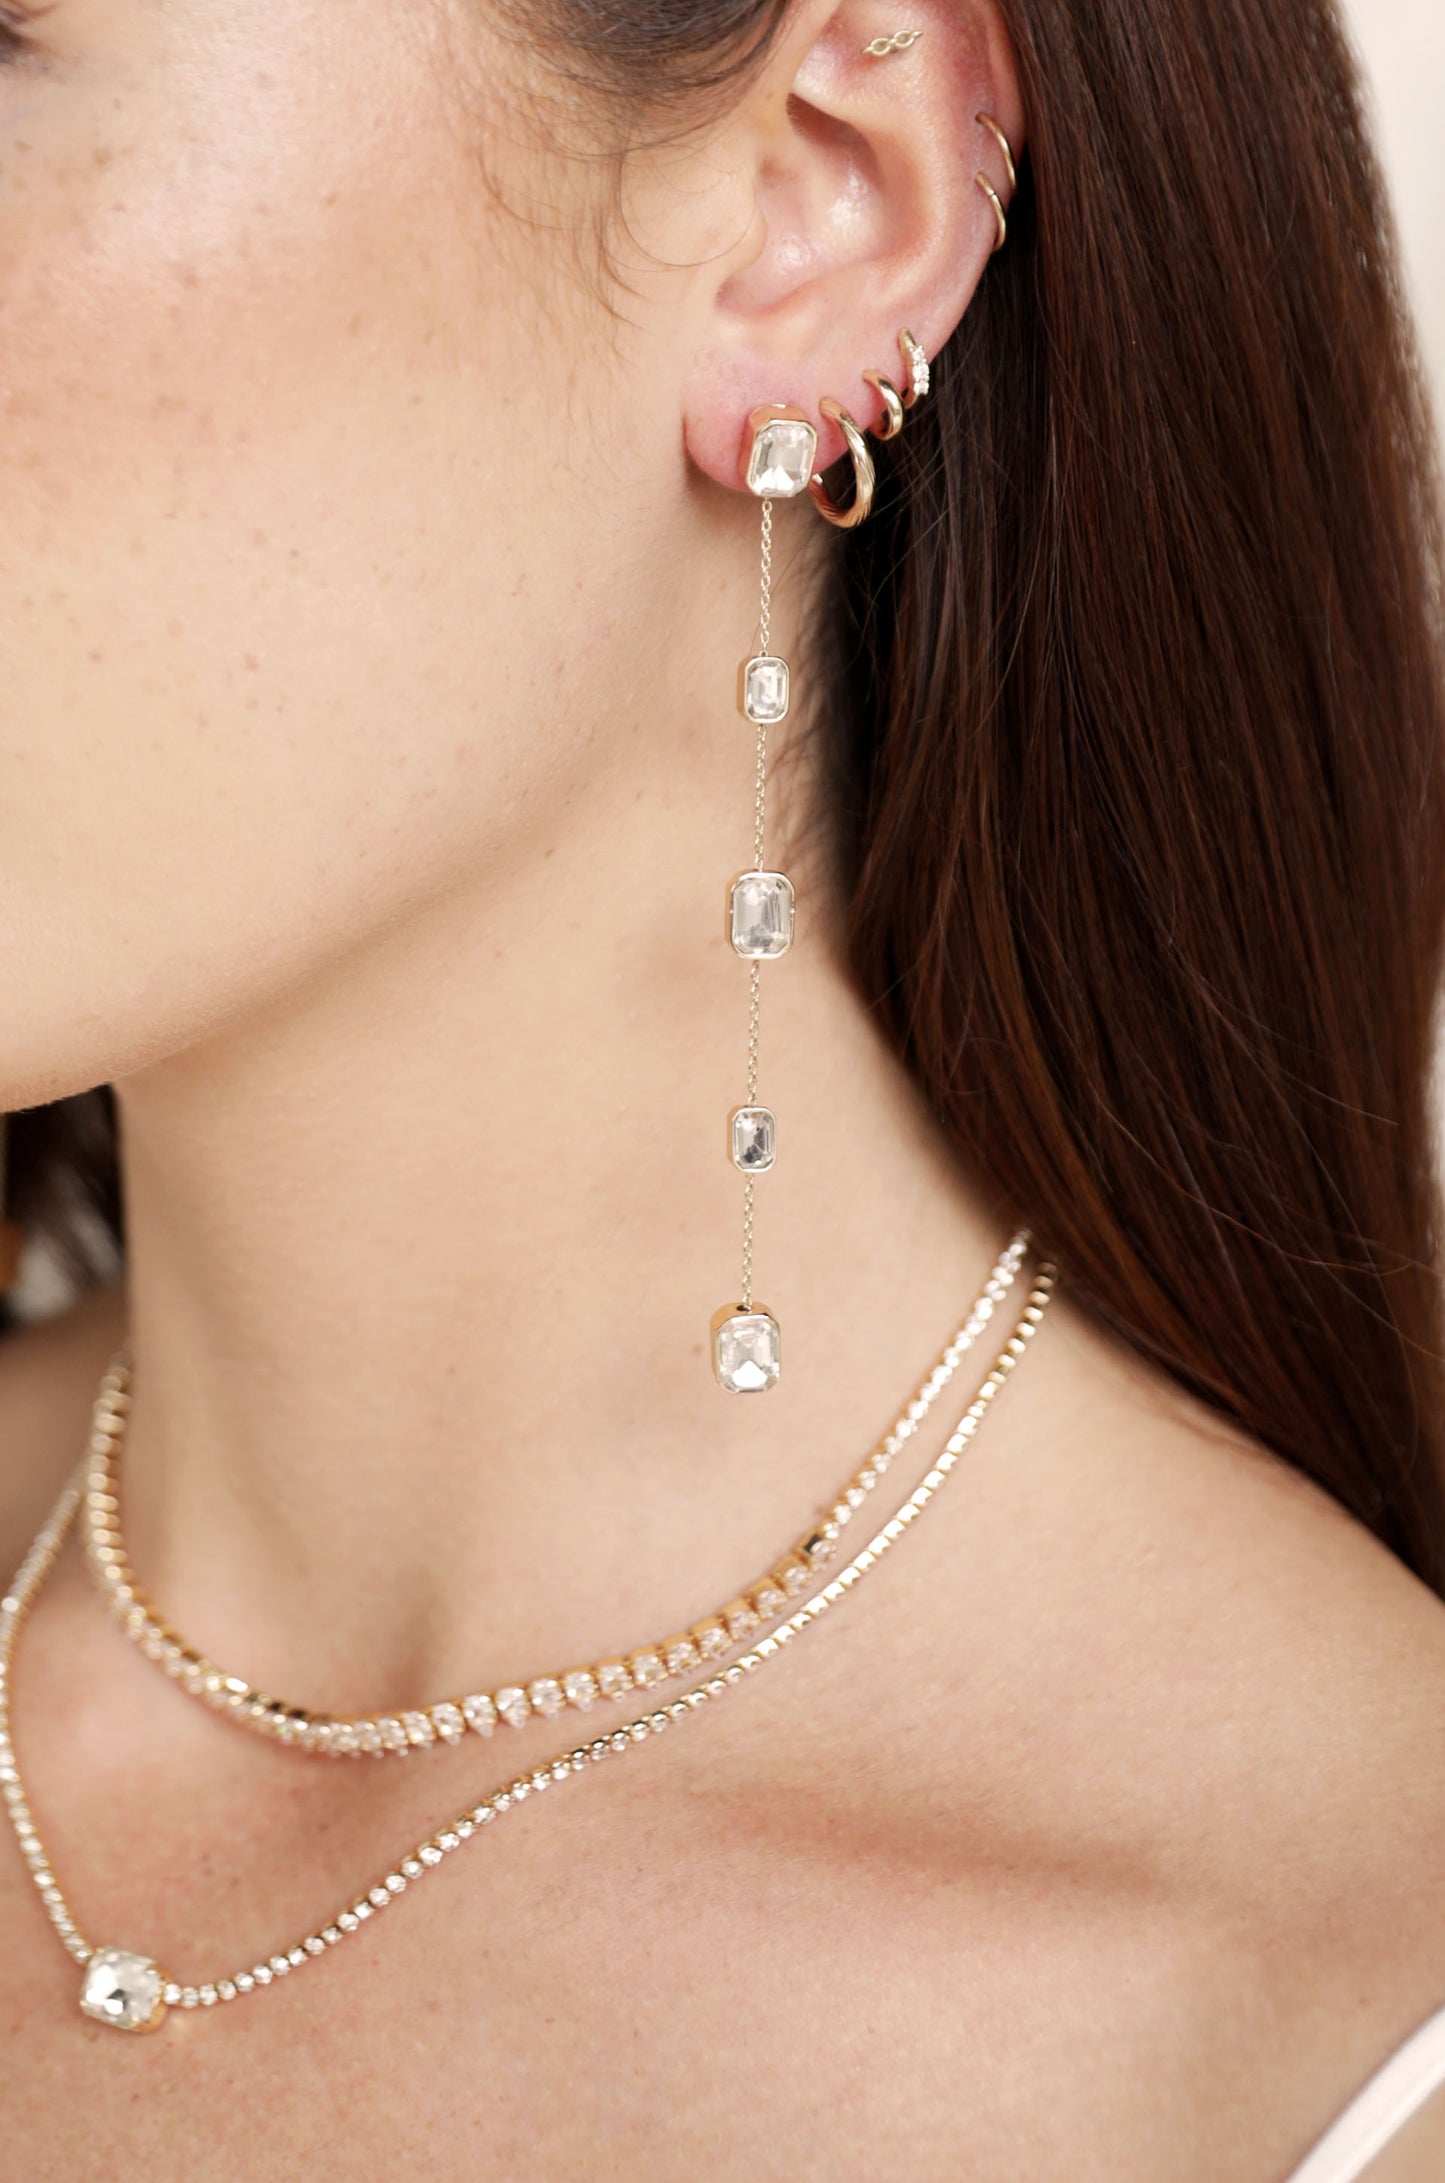 Iconic Crystal Dangle Earrings on a model